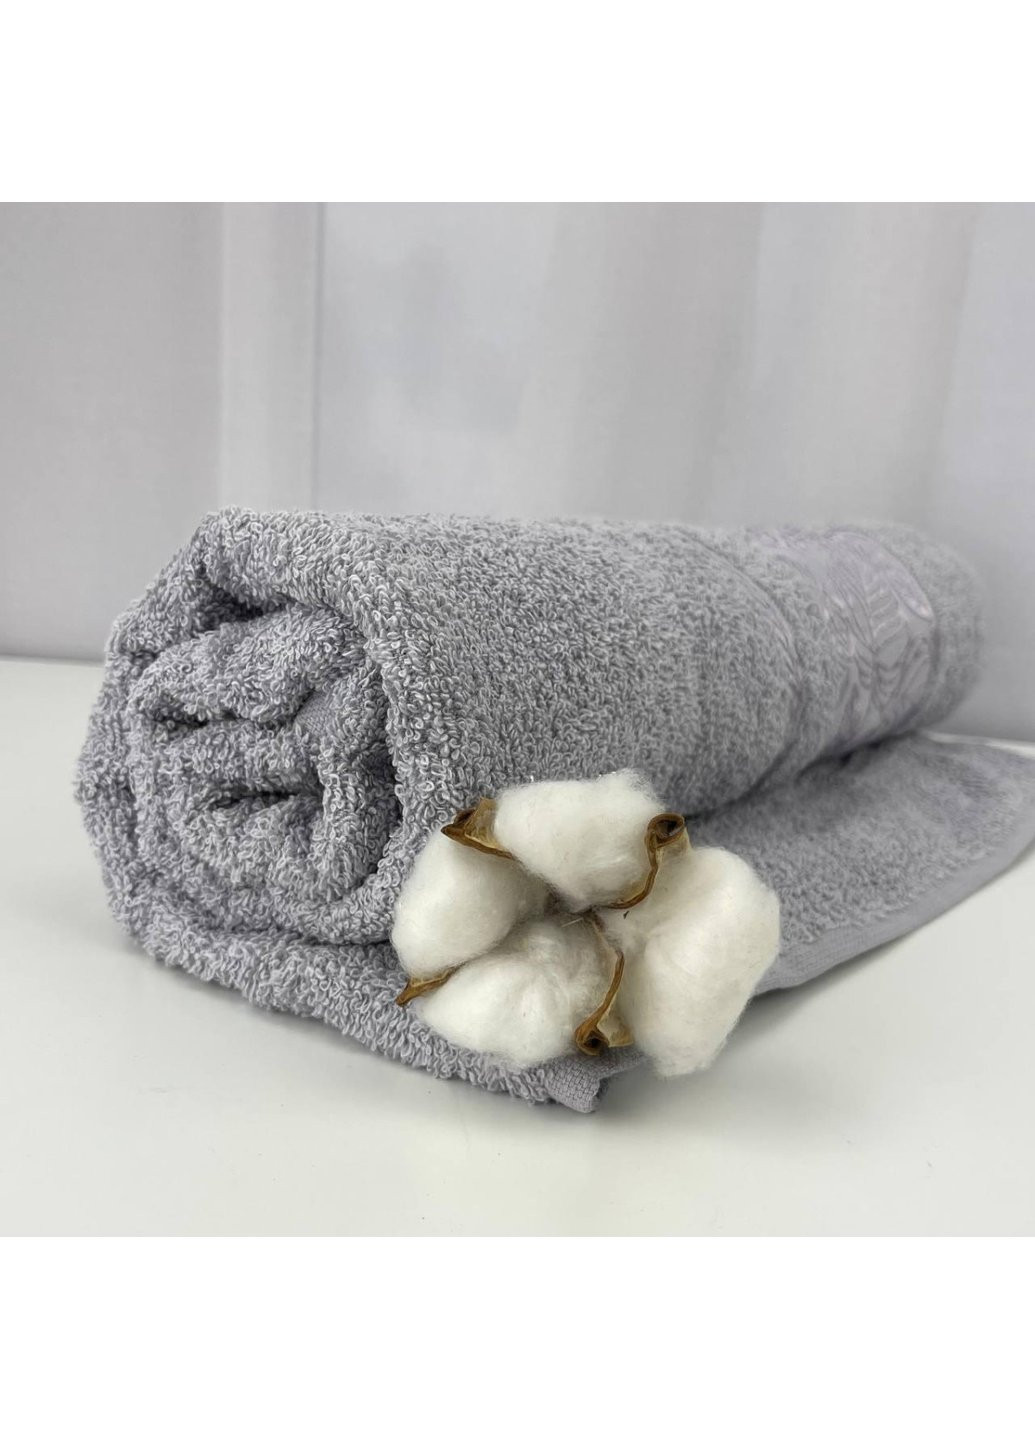 Power полотенце банное махровое febo vip cotton botanik турция 6383 серое 70х140 см комбинированный производство - Турция